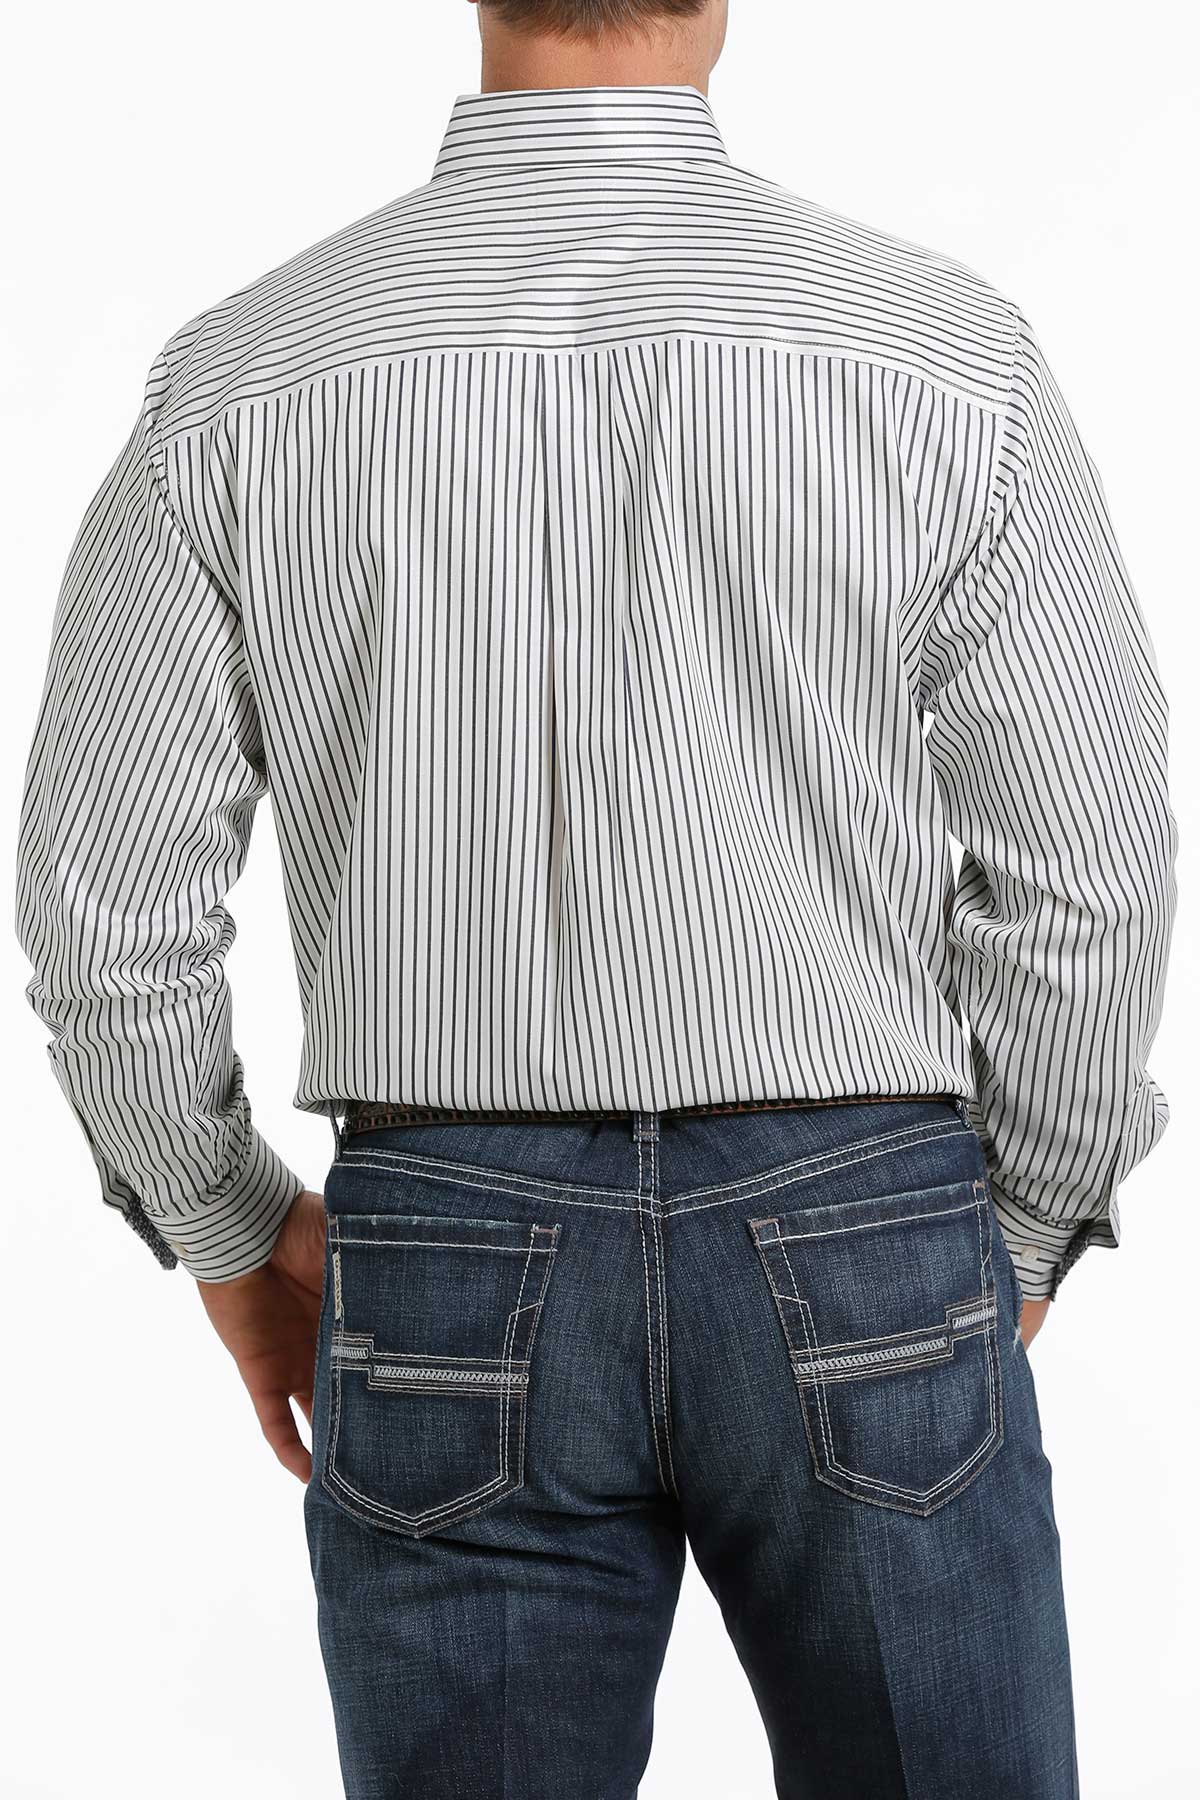 Cinch Mens White/Navy Stripe Shirt (5298)